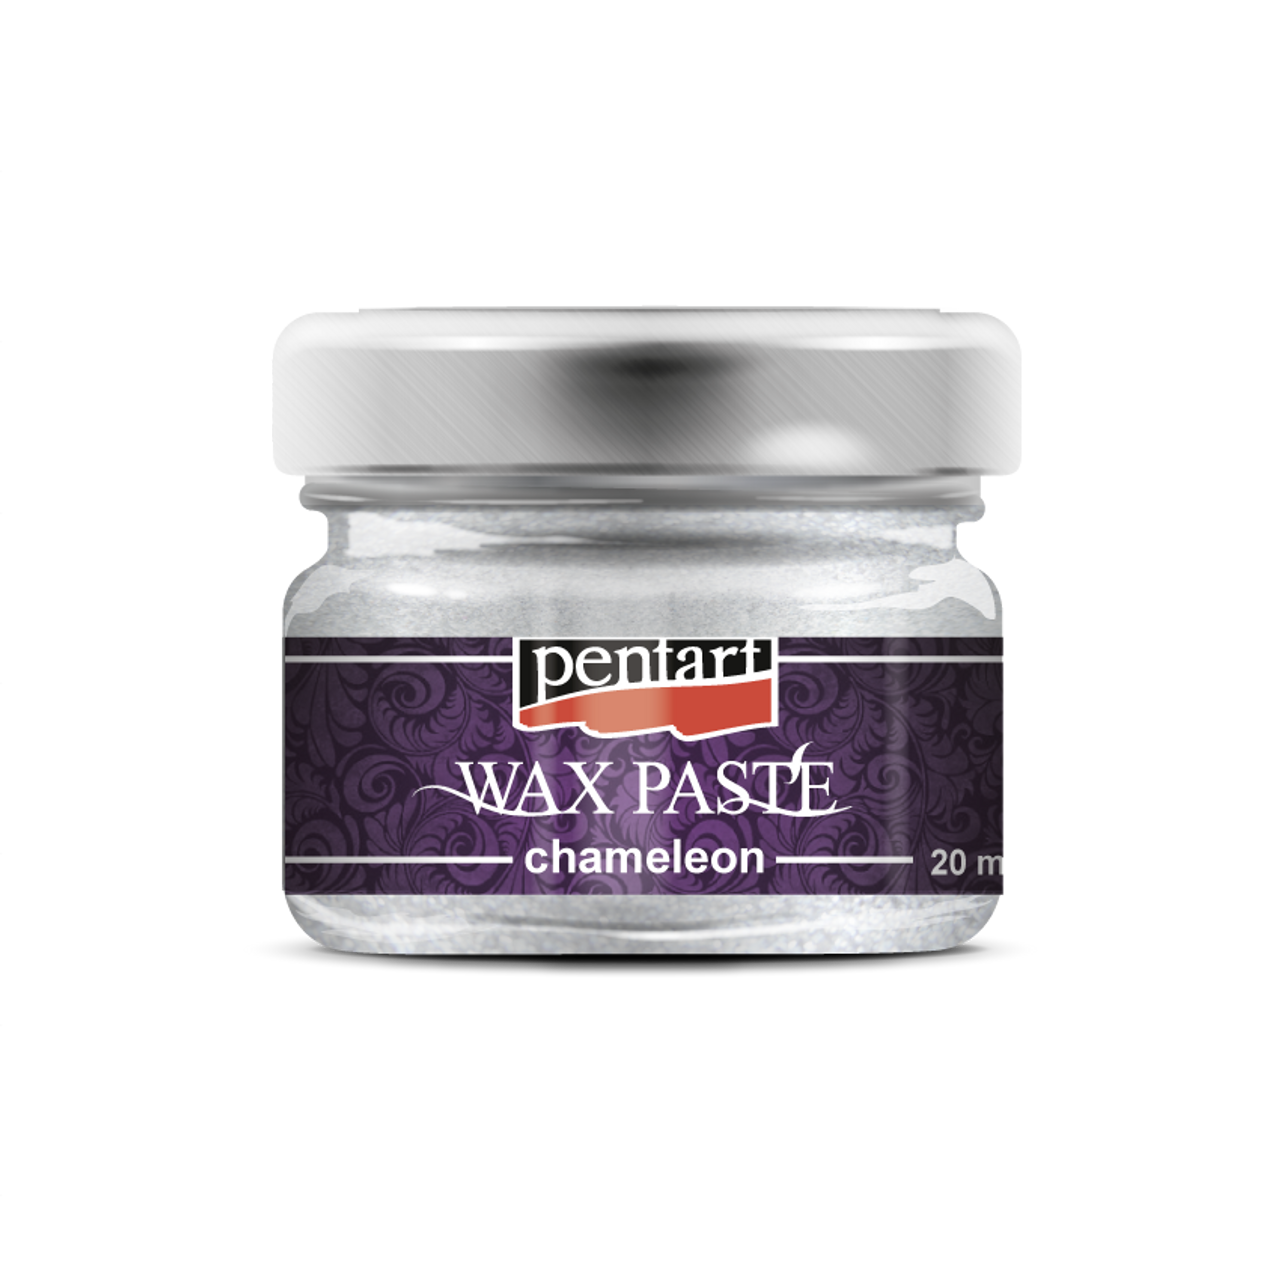 Pentart Wax Paste Metallic  and chameleon 20 ml